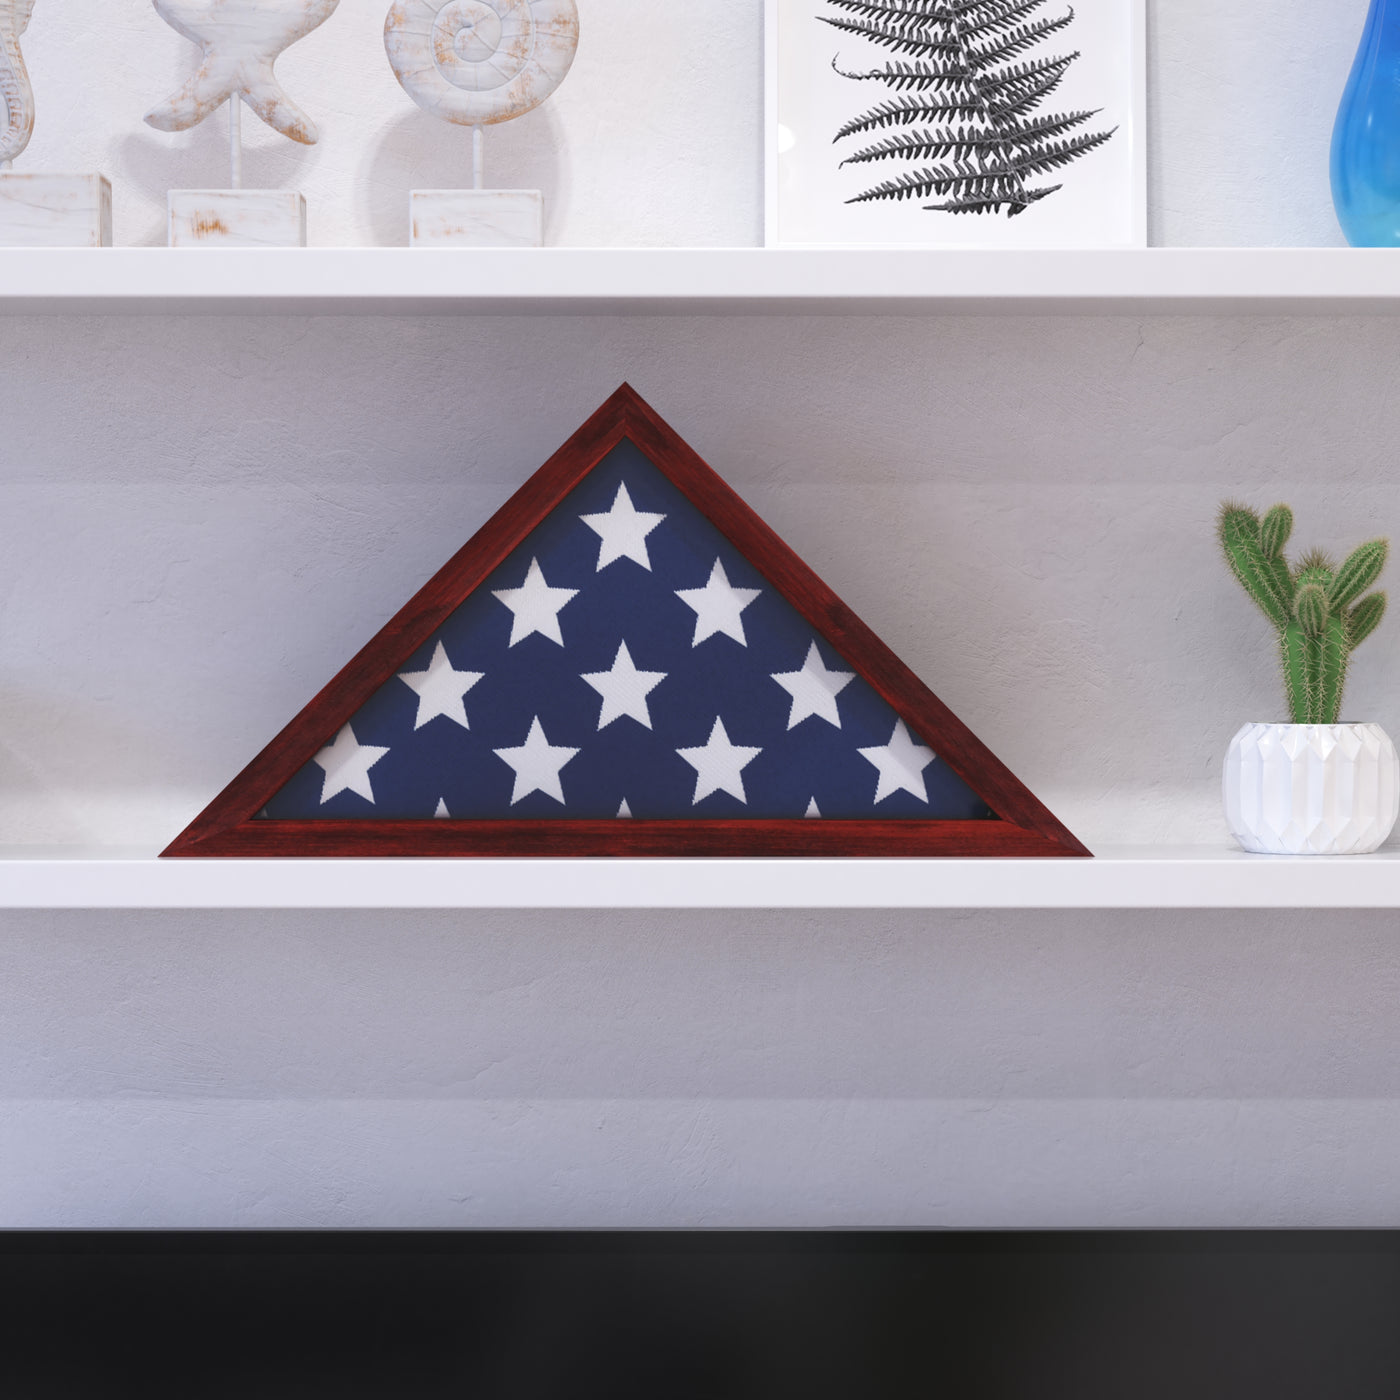 Rustic Military Flag Display Case for 9.5 x 5 American Veteran Burial Flag - Mahogany